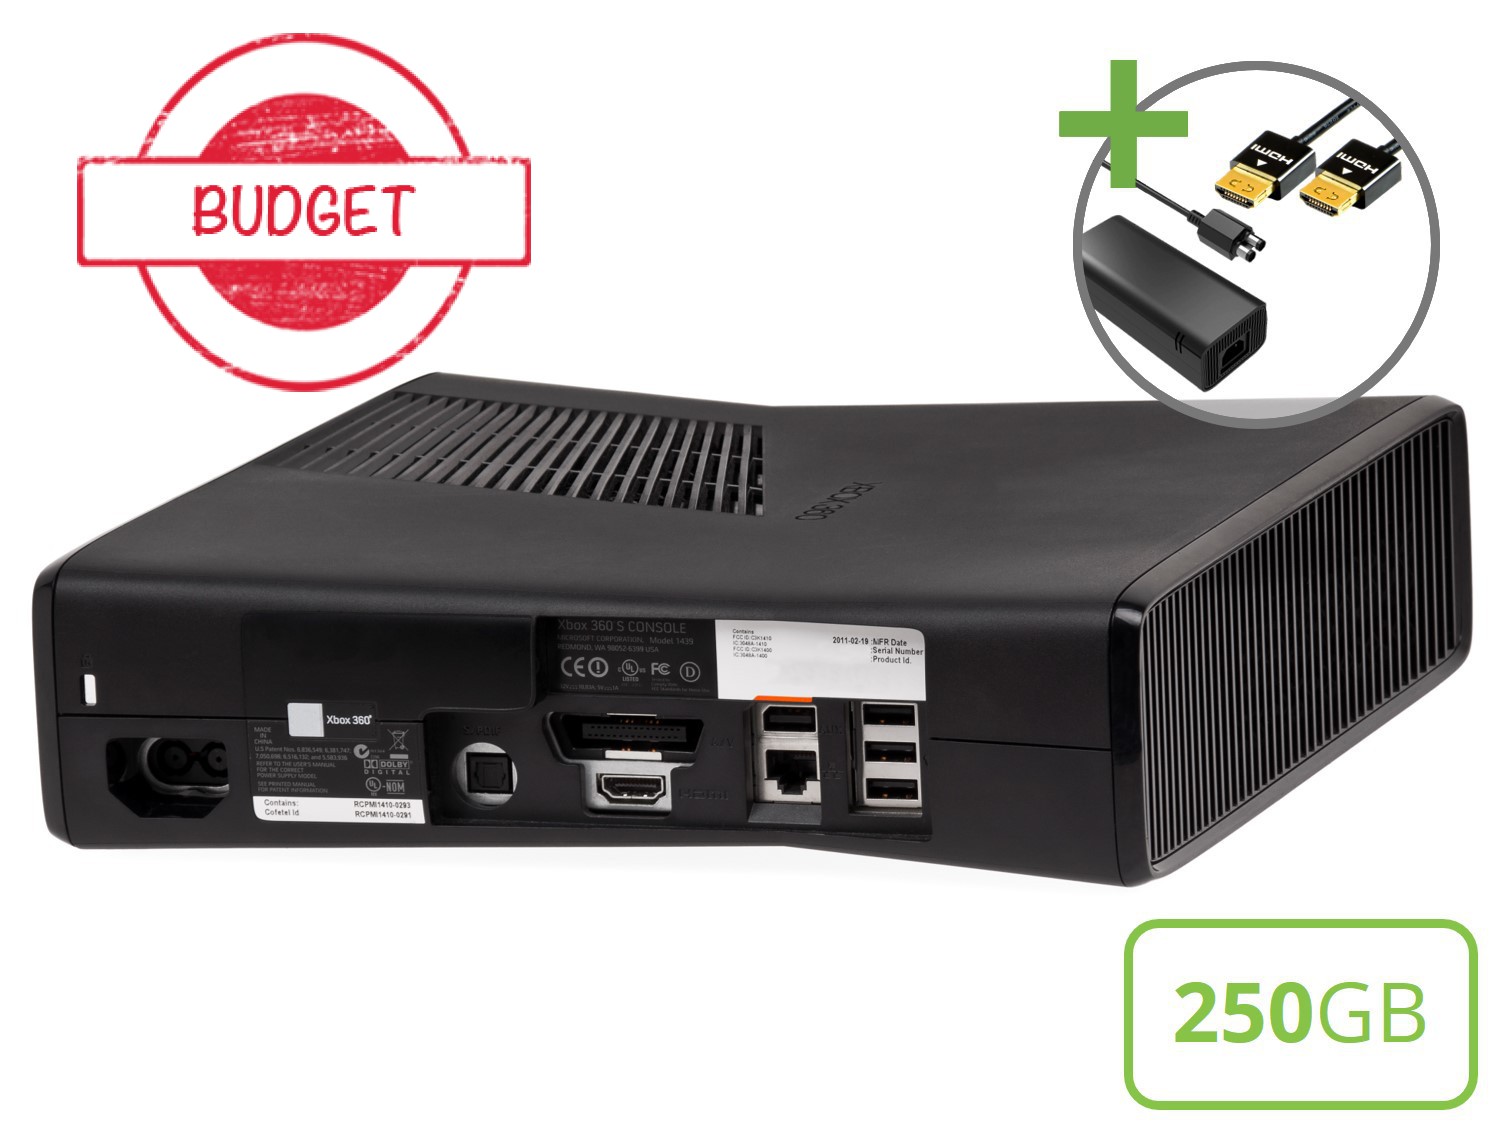 Microsoft Xbox 360 Slim Starter Pack - Forza 3 and Crisis 2 Edition - Budget - Xbox 360 Hardware - 3